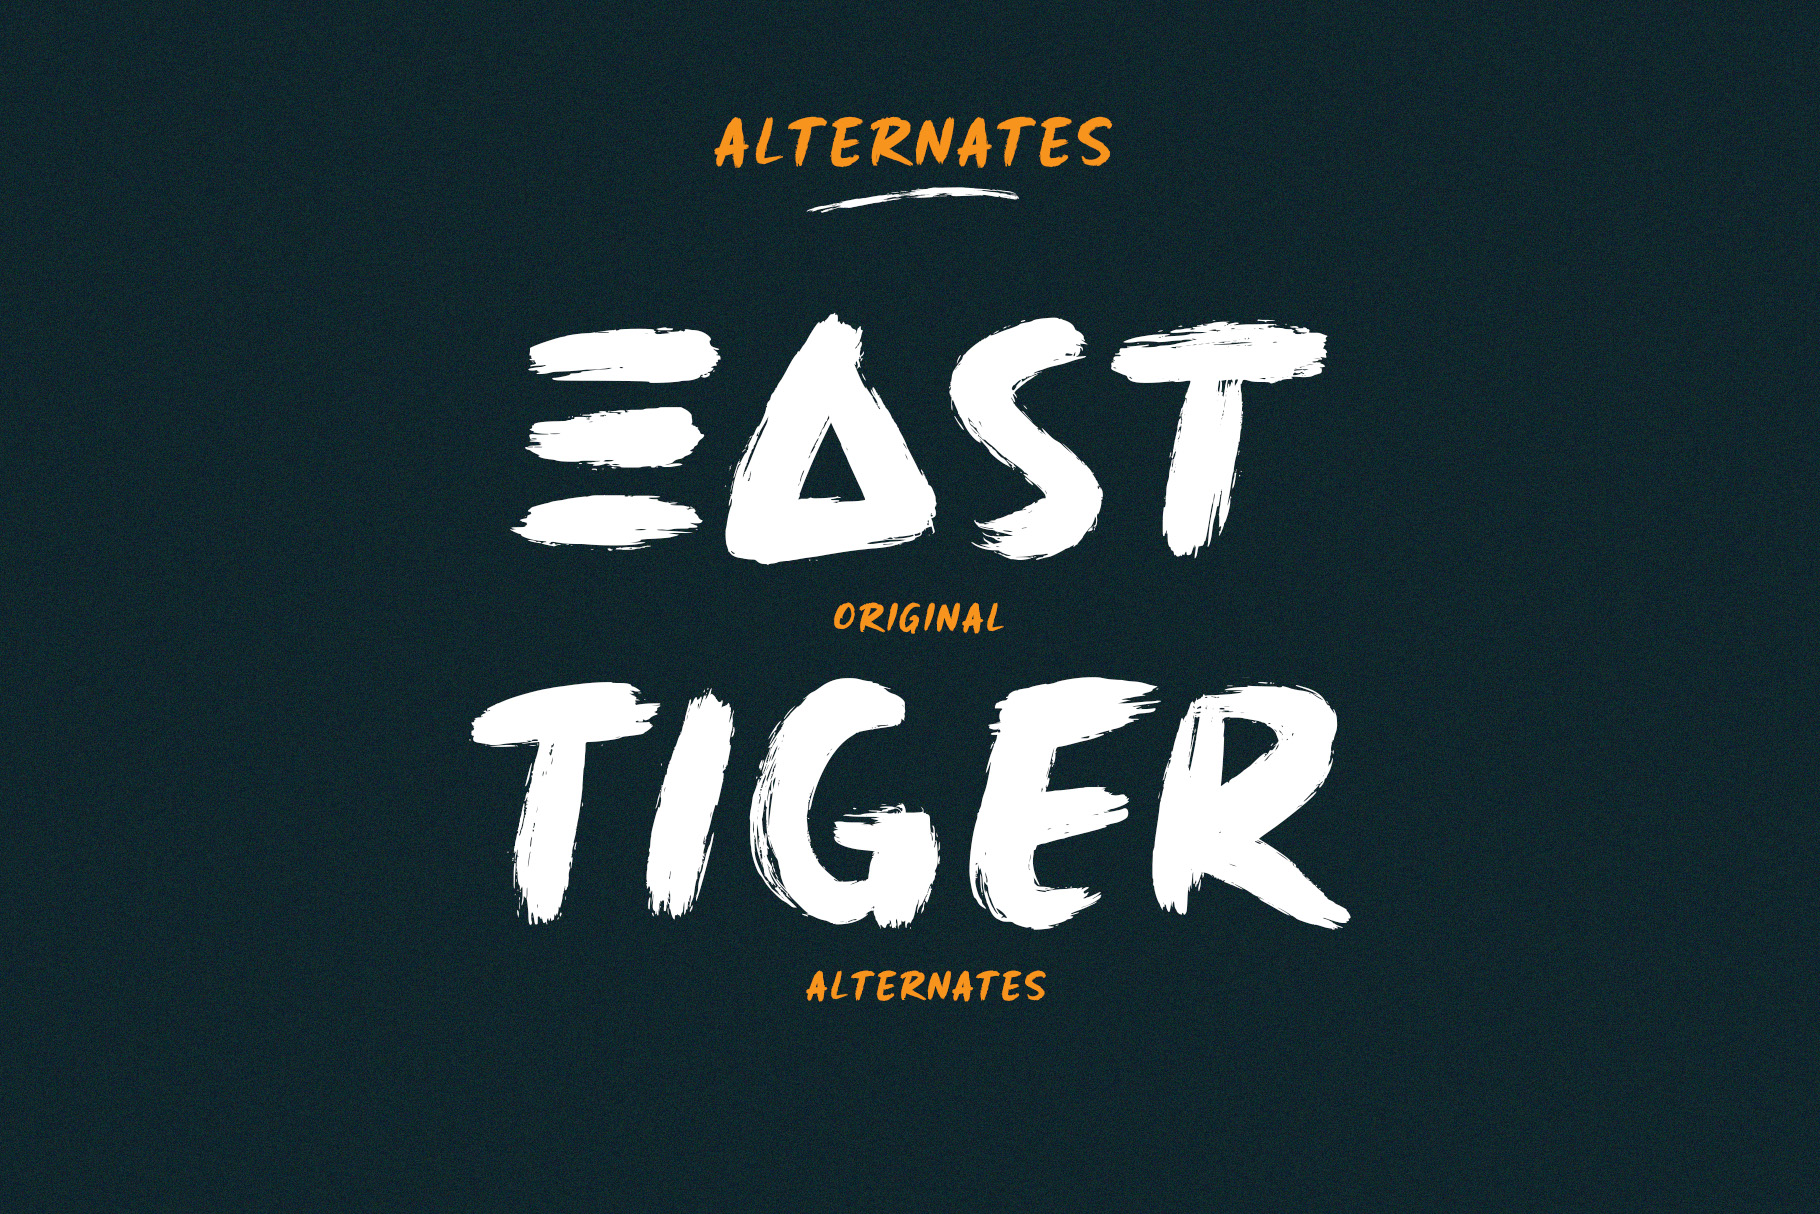 East Tiger